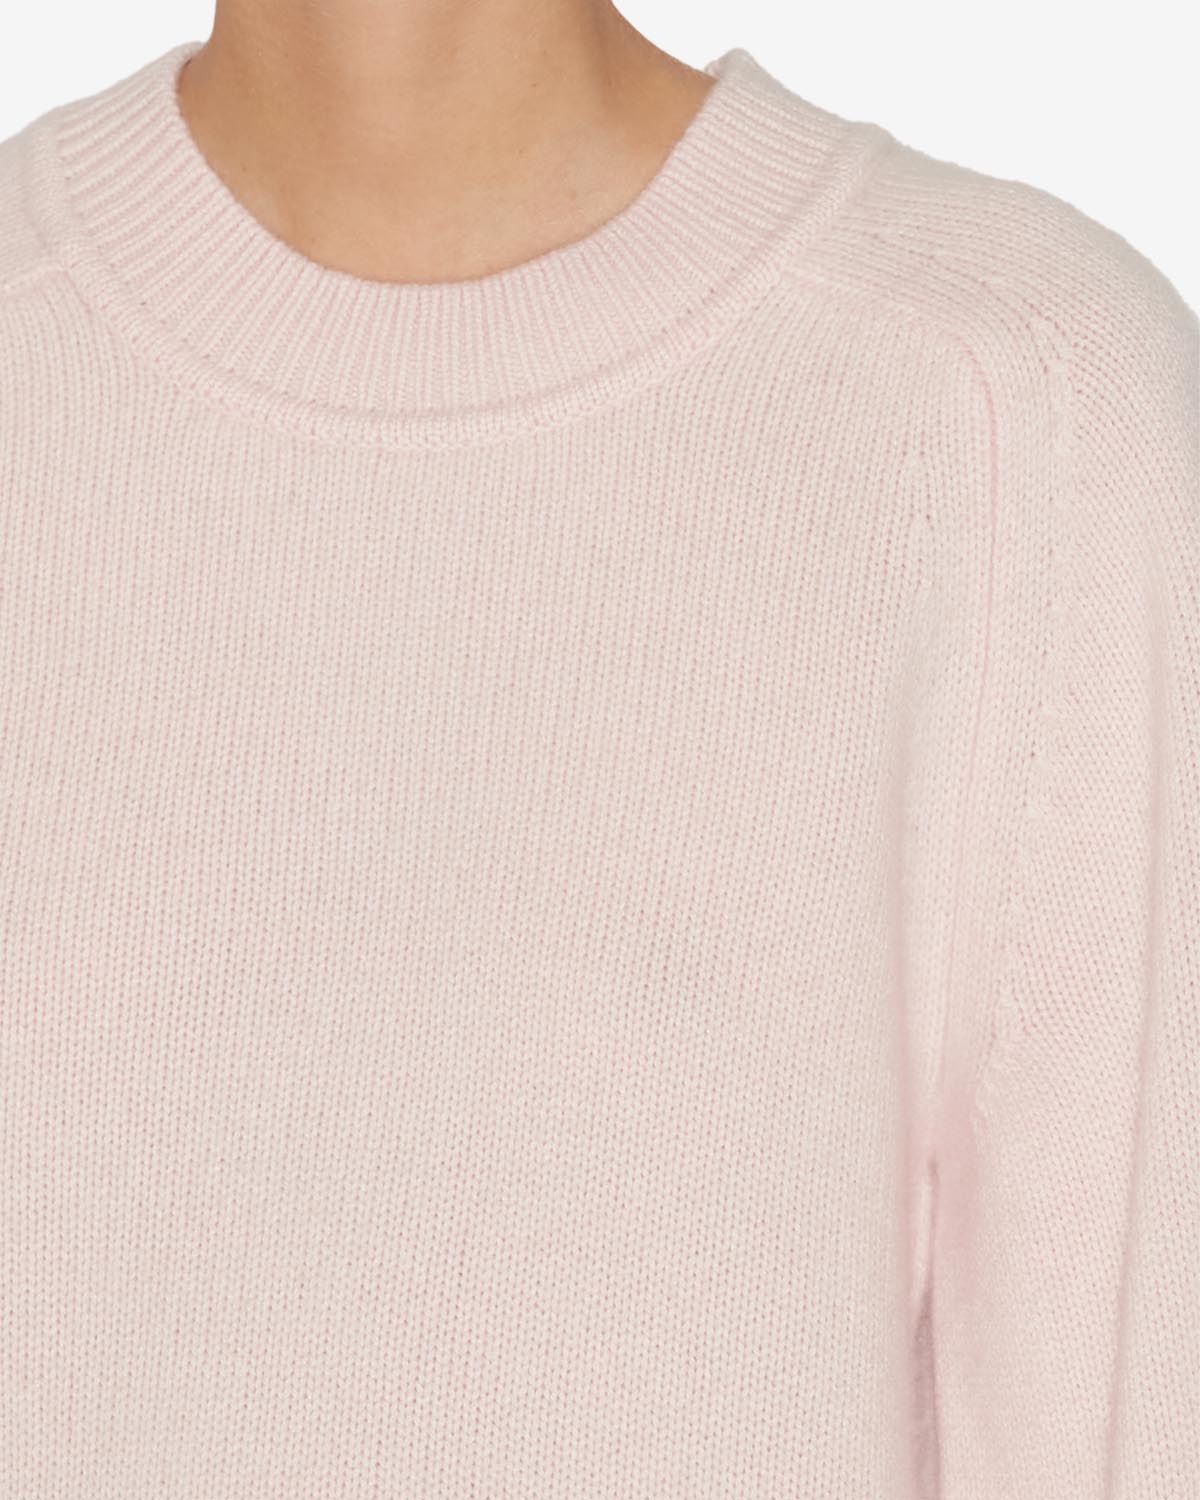 Leandra セーター Woman Light pink 2